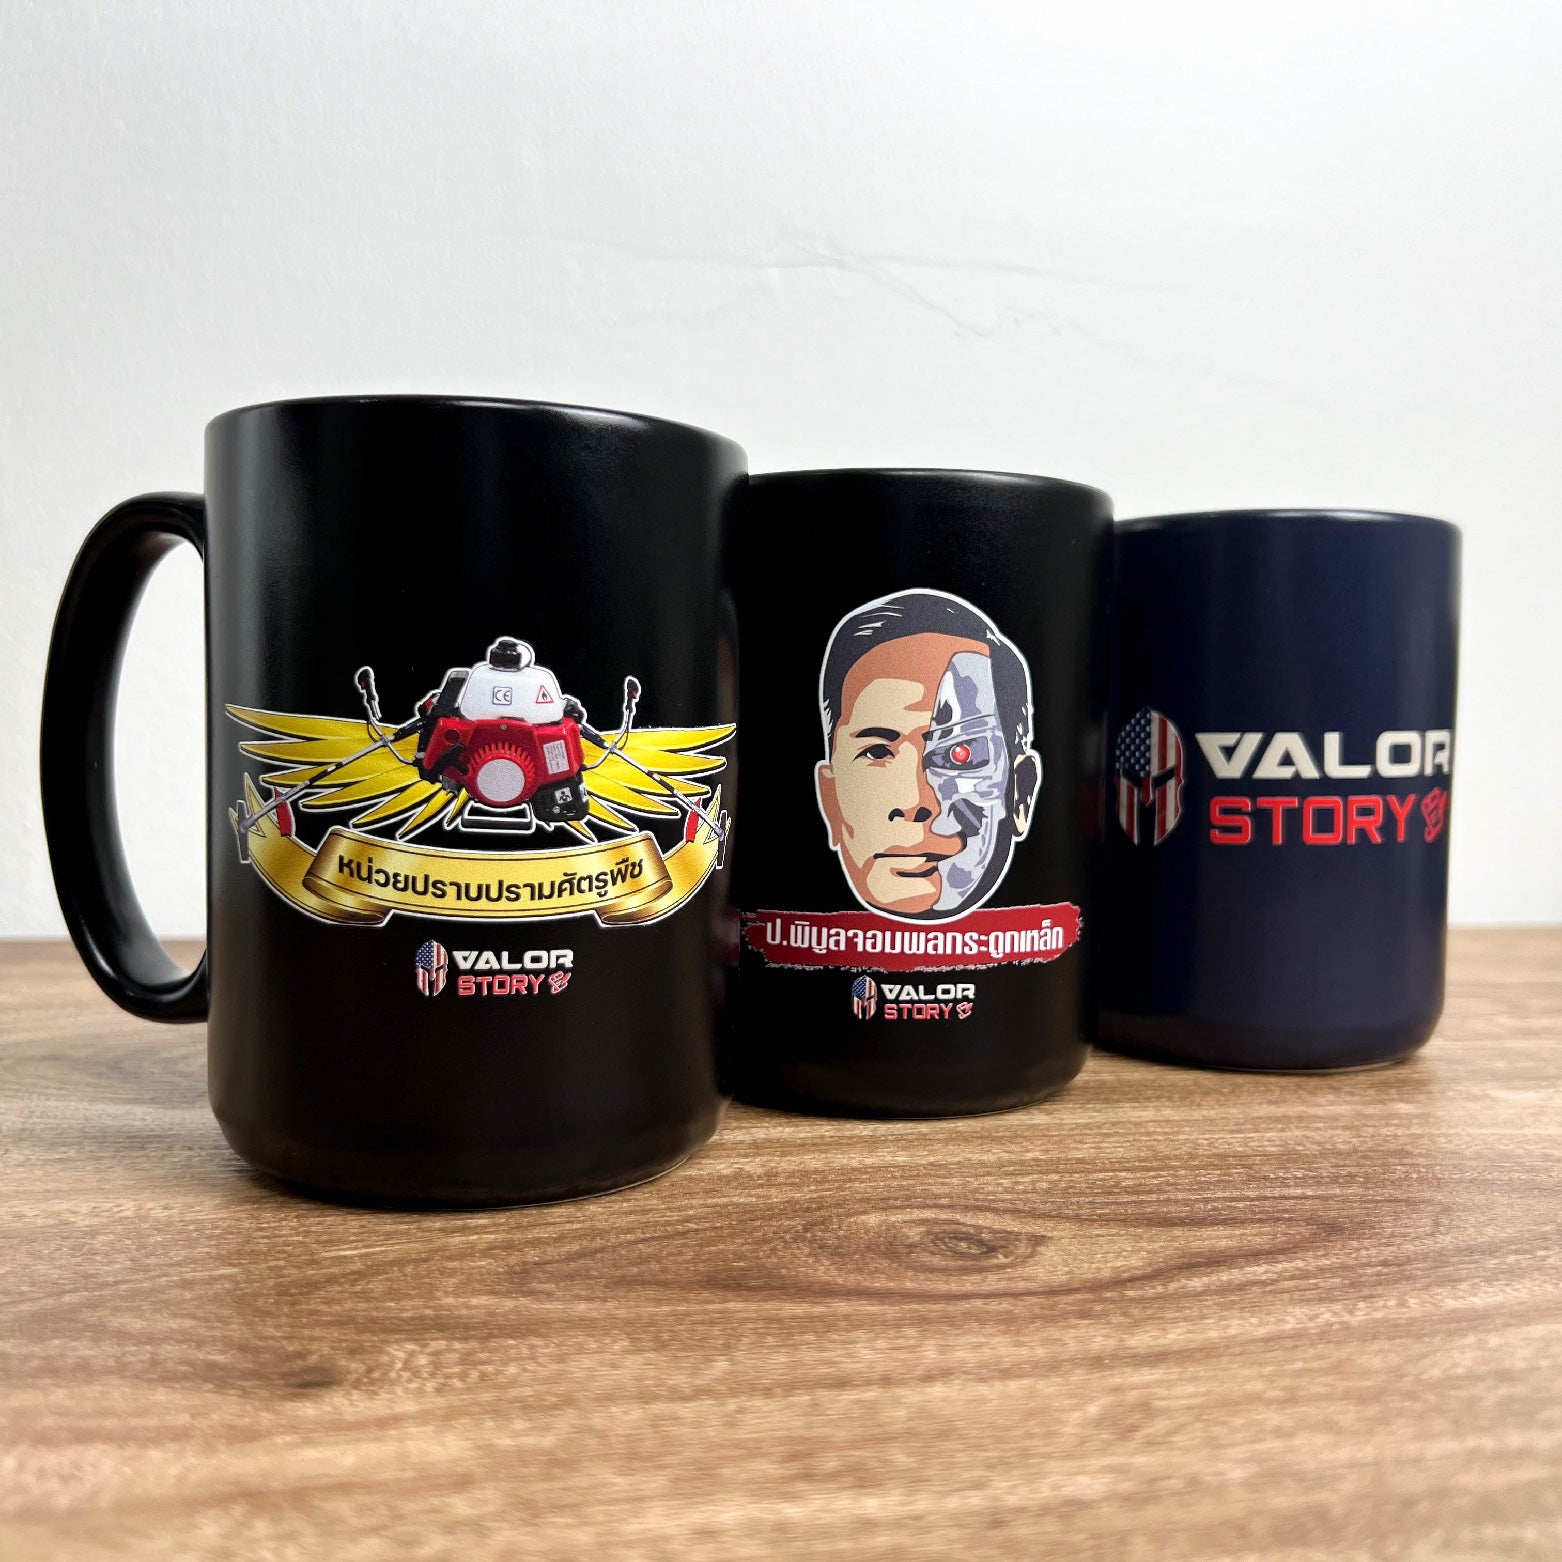 Valor PX Ceramic Mug แก้วกาแฟ - จอมพล ป.T-800 [Black]